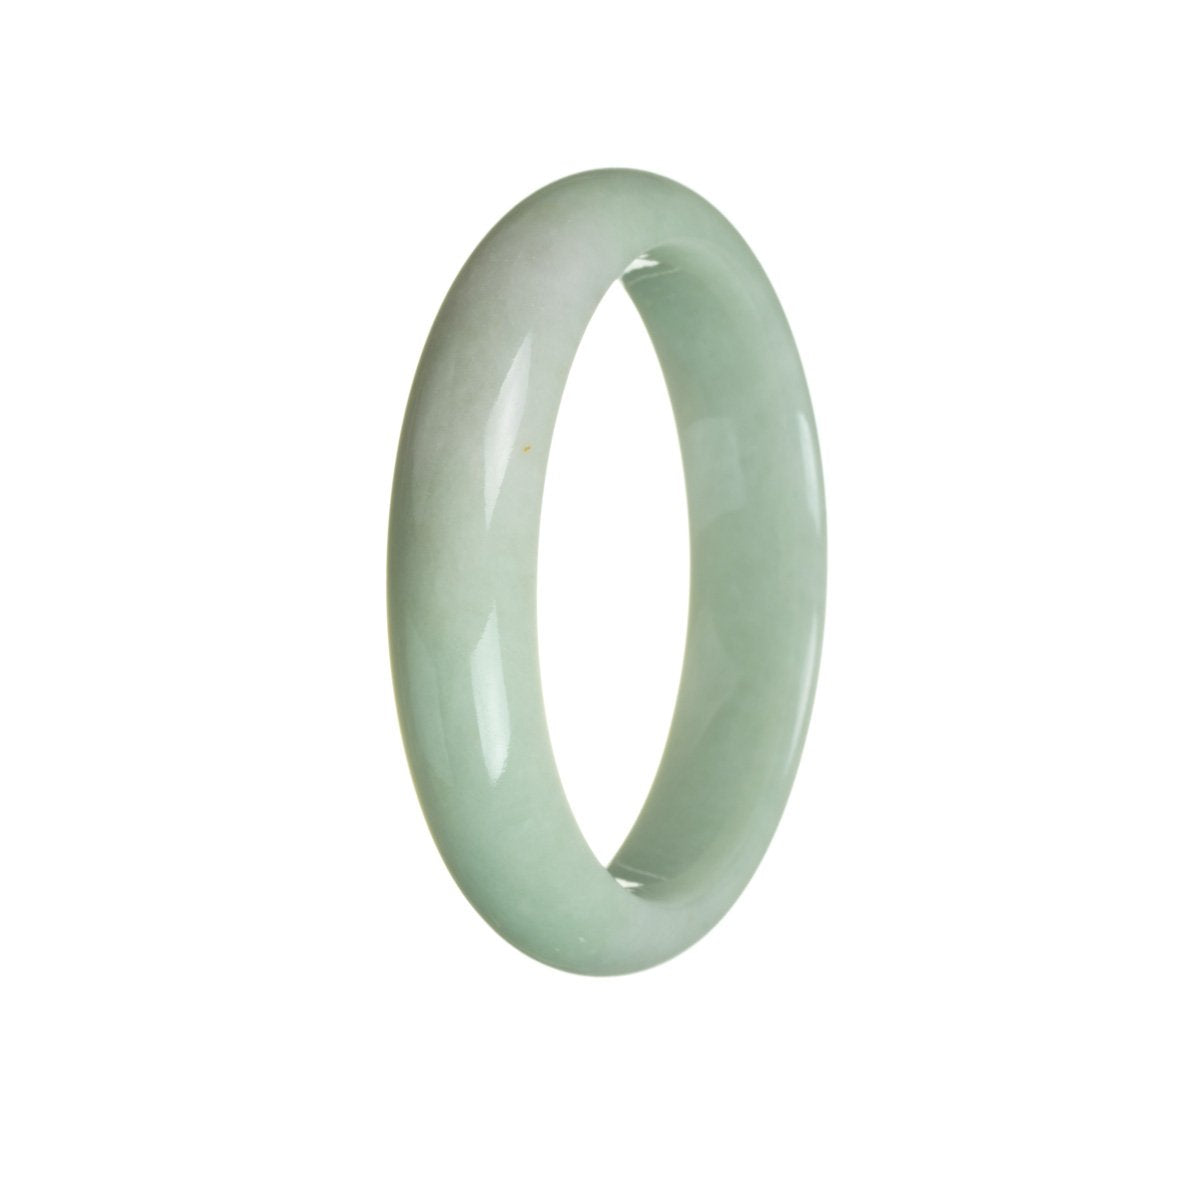 Certified Natural Green Jade Bangle Bracelet - 59mm Half Moon